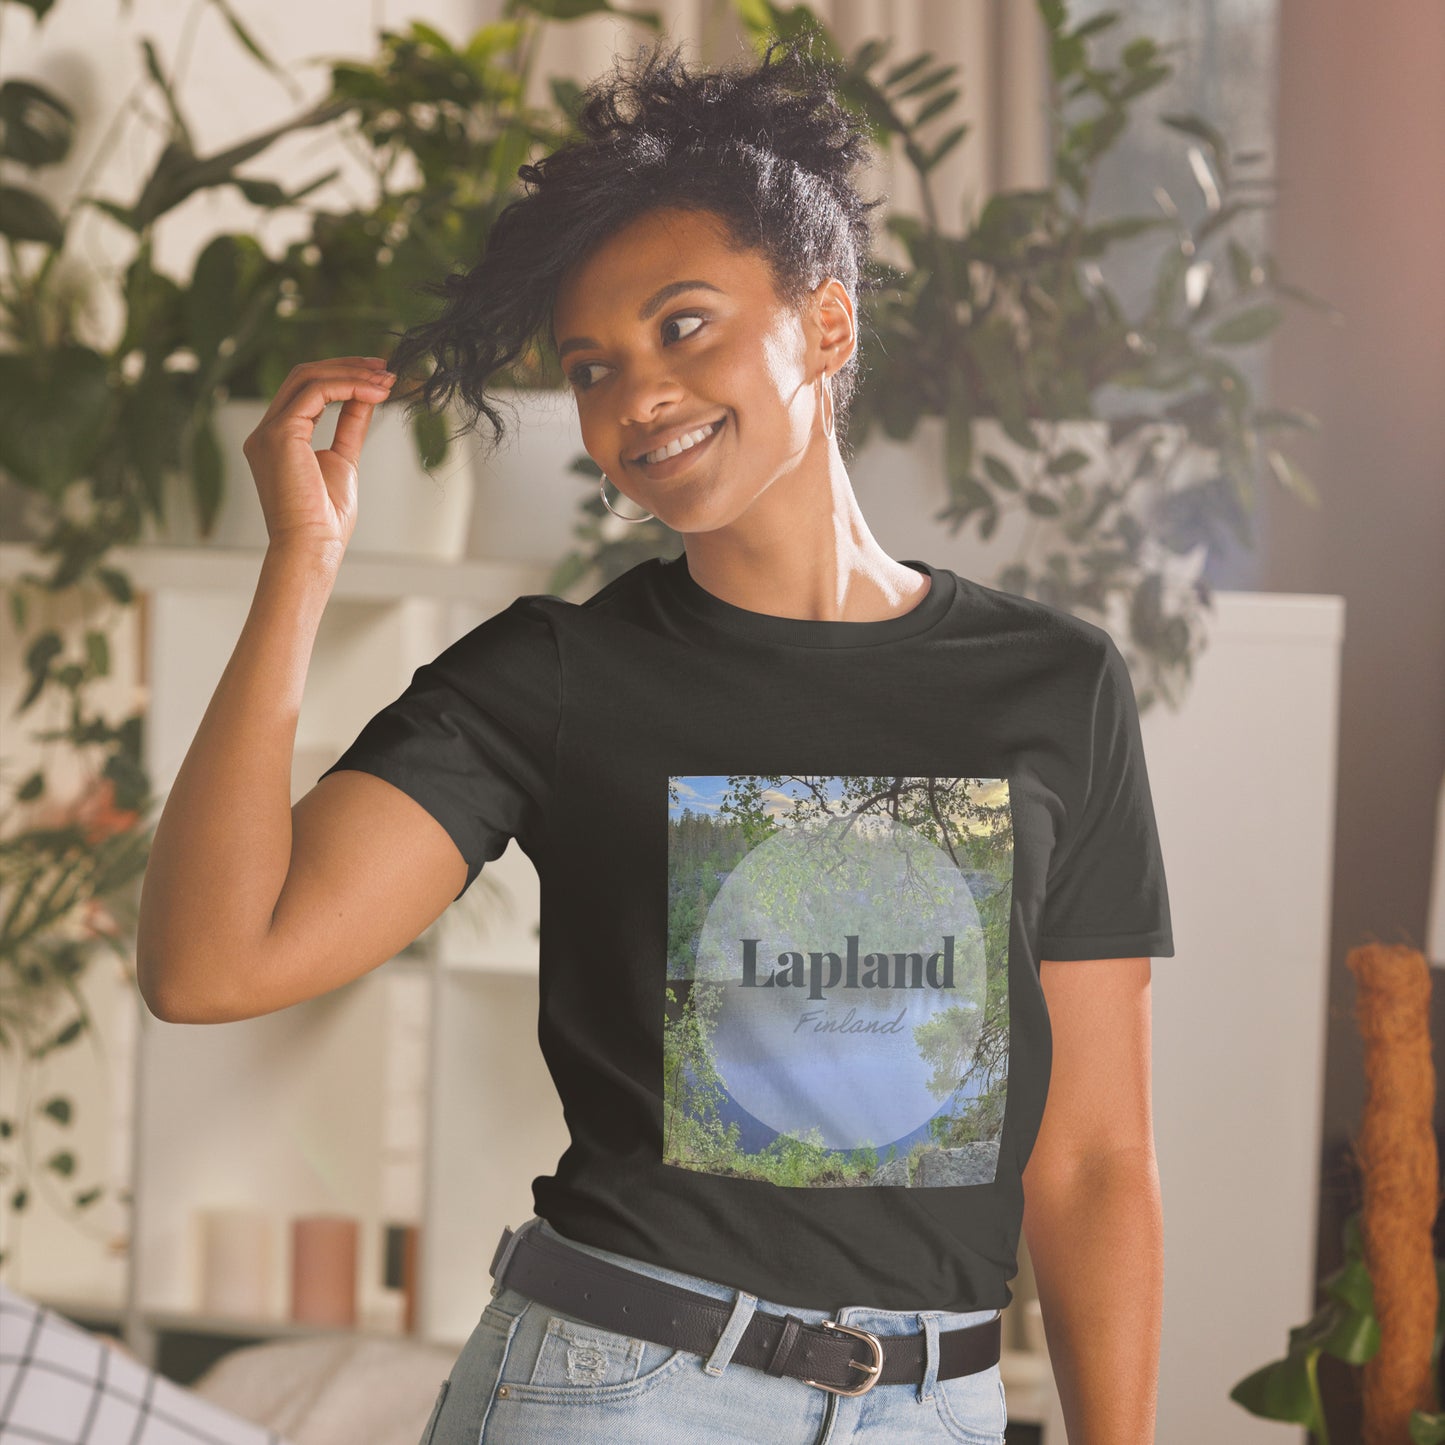 "Lapland" unisex t-shirt